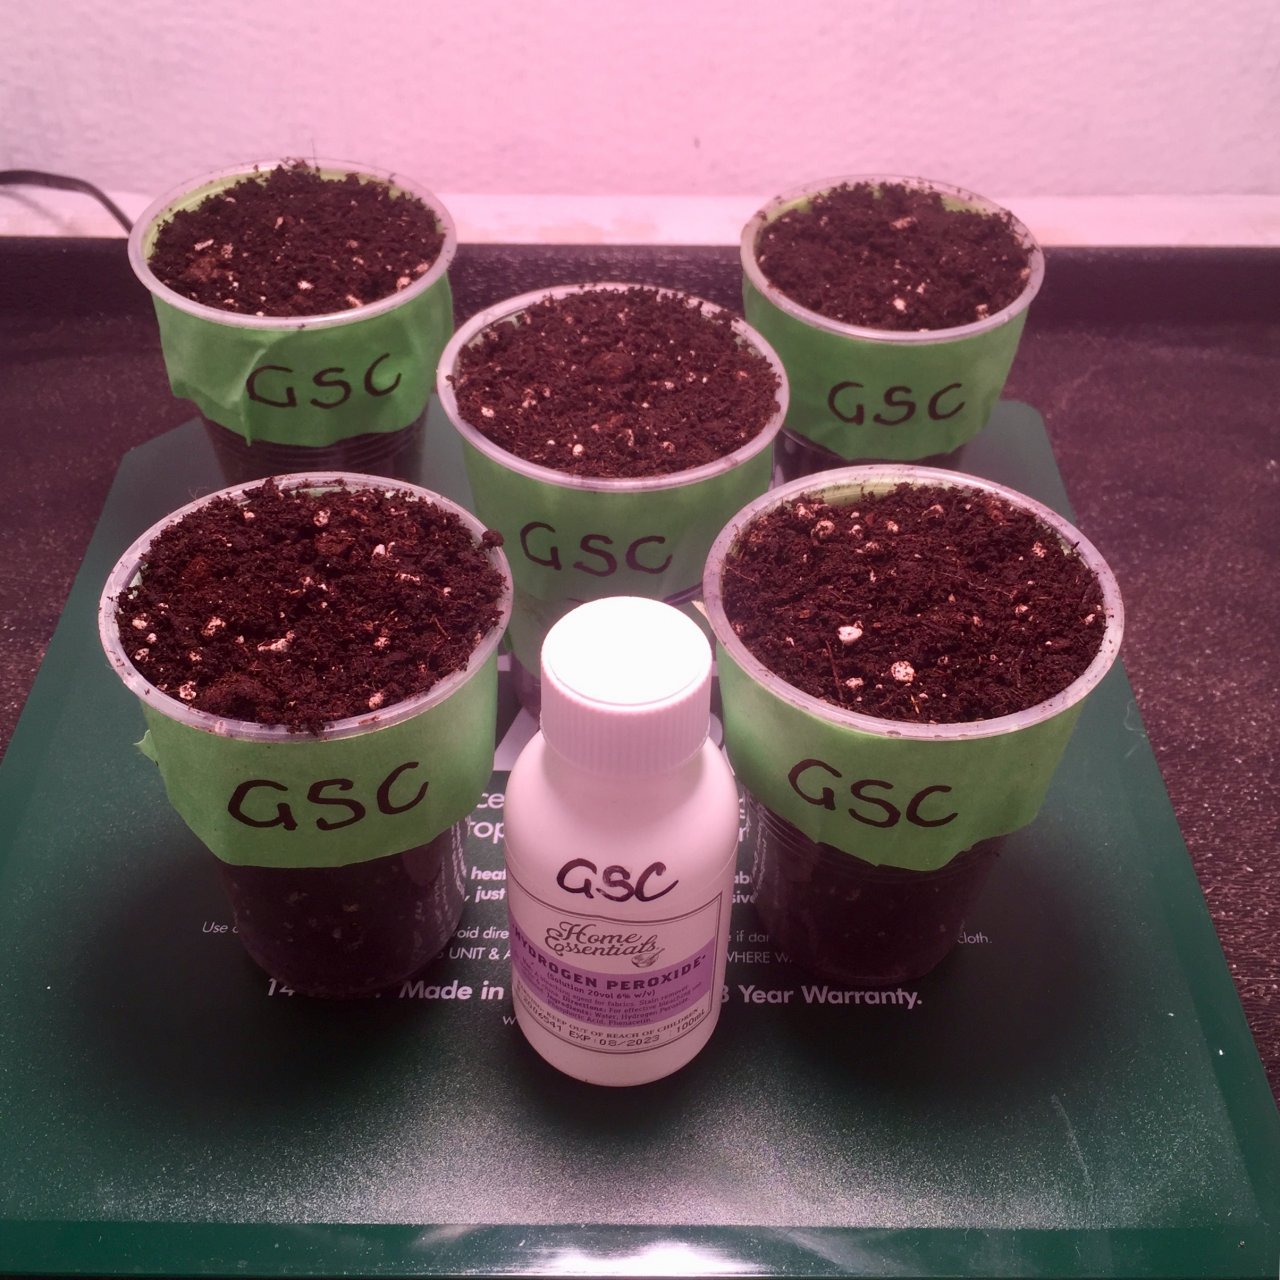 GSC seeds soaking